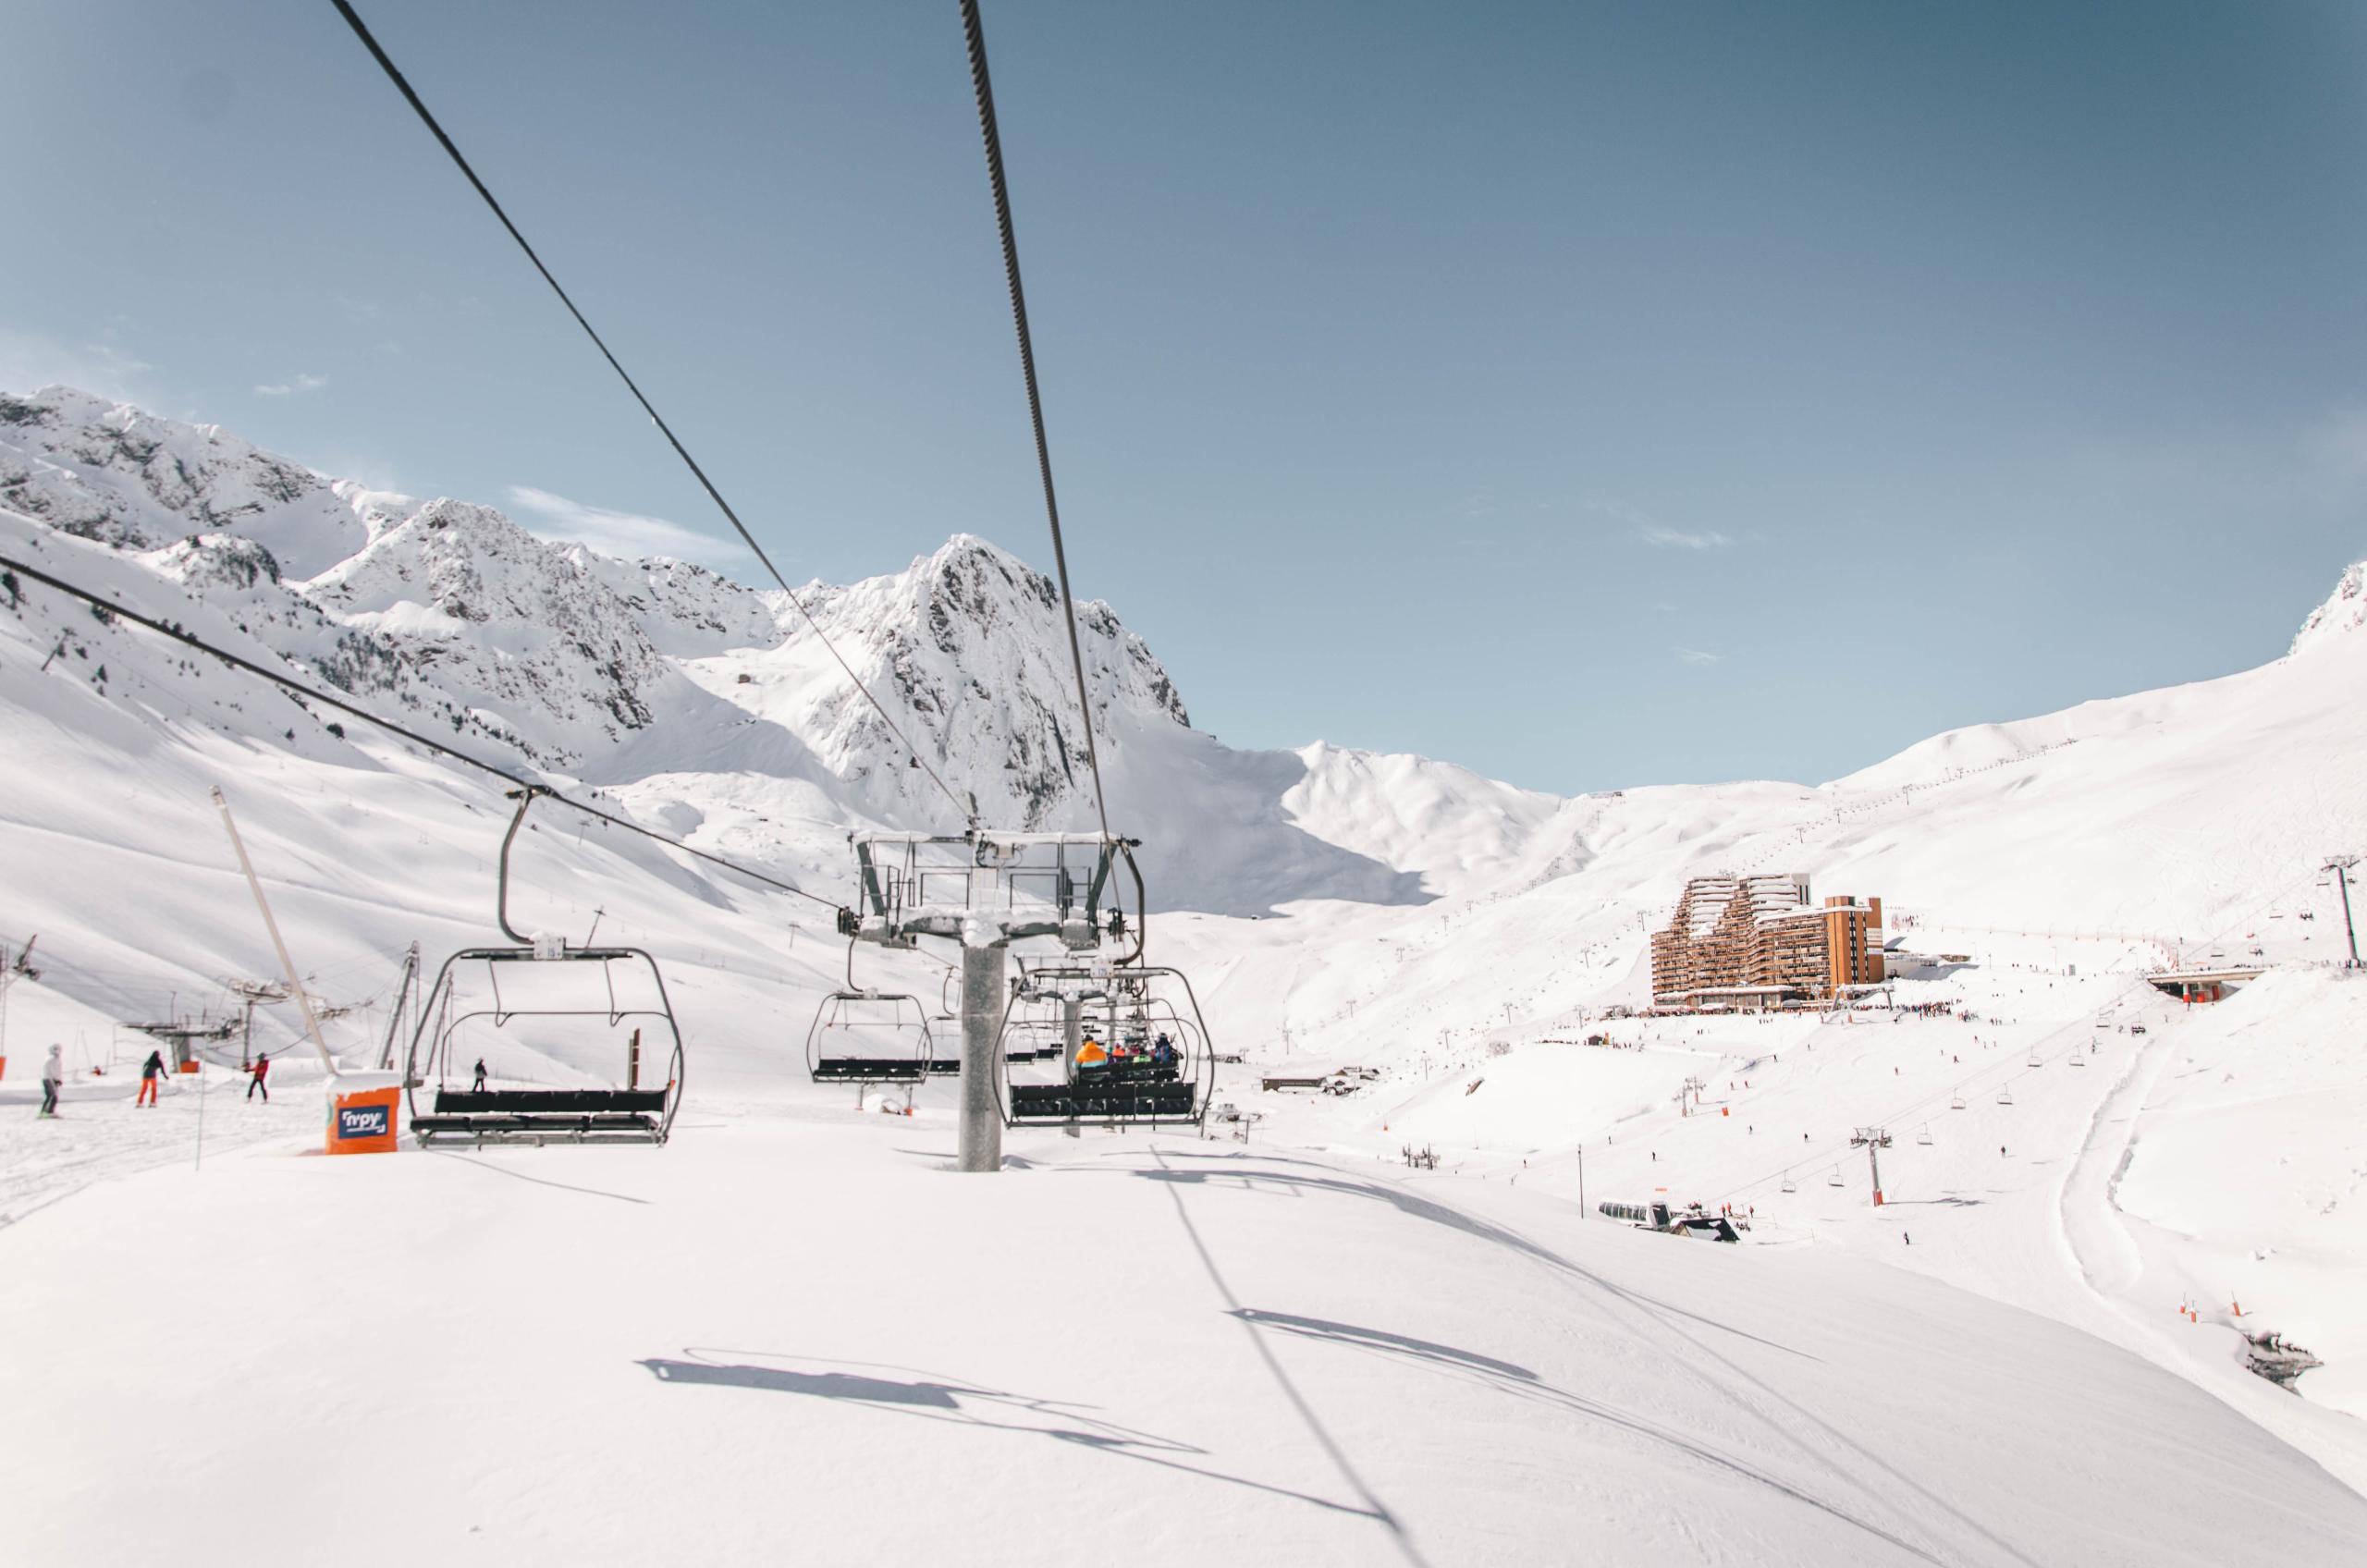 ski resort Barèges/La Mongie